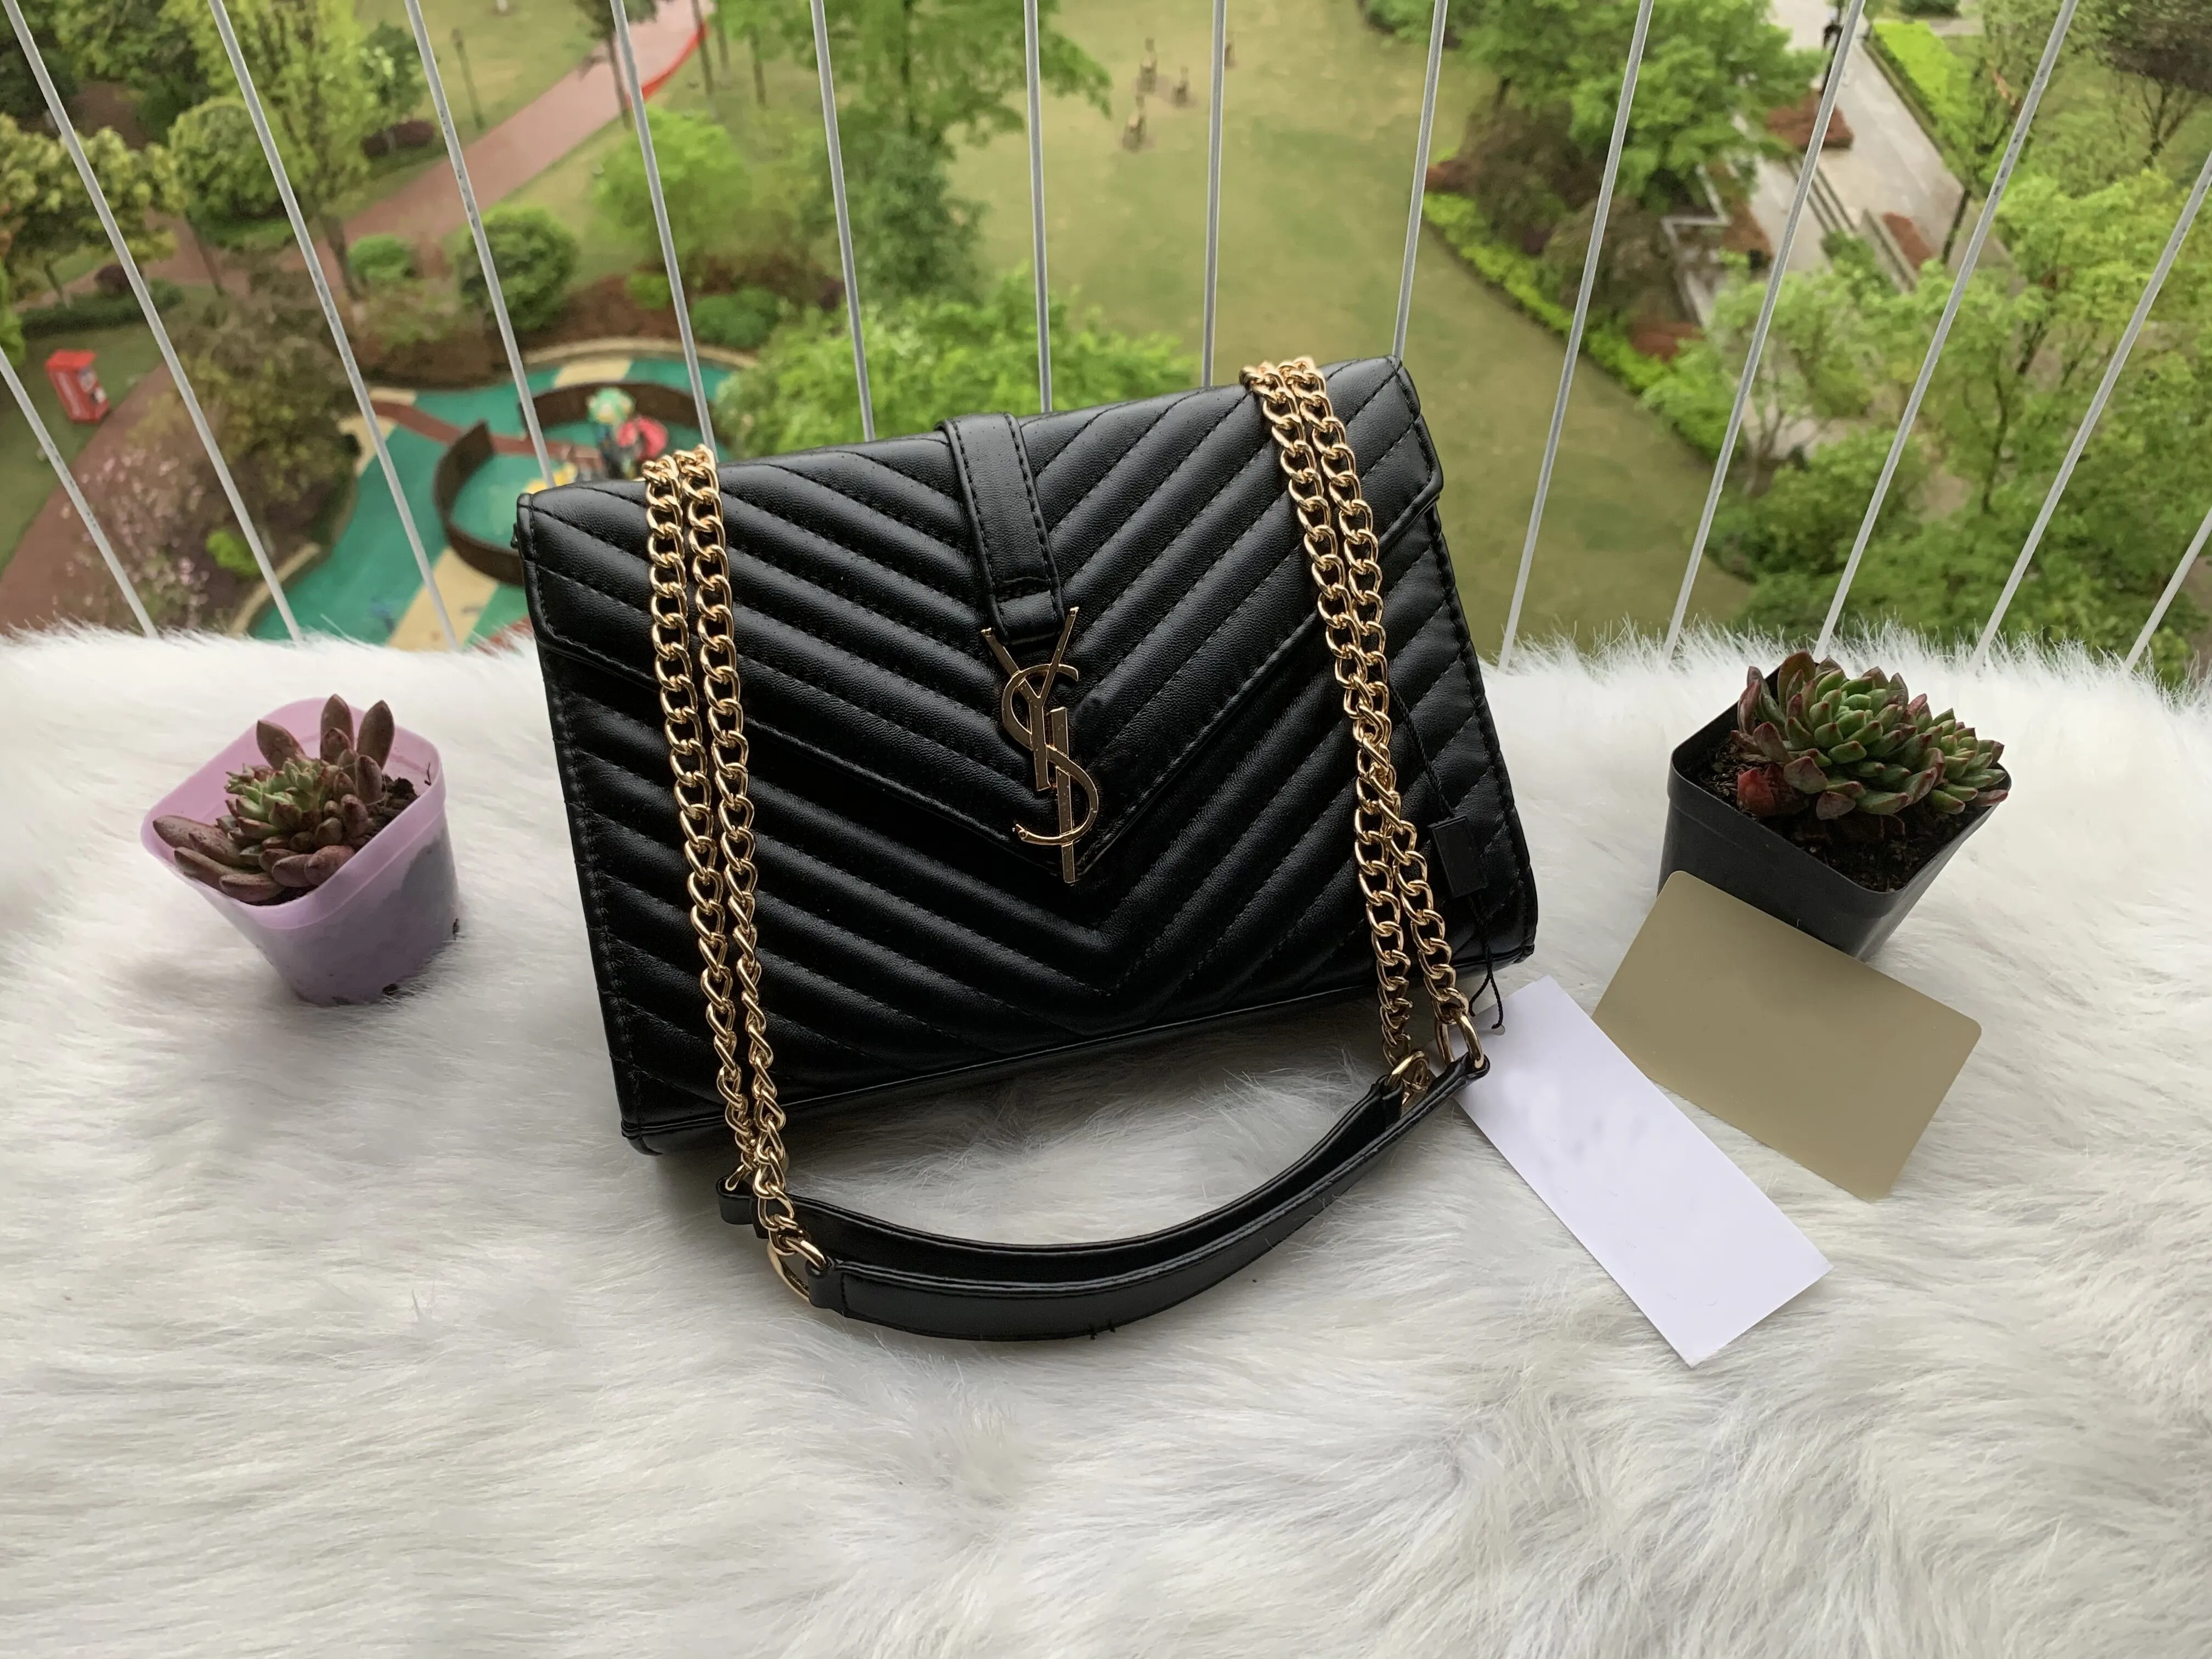 5 Best Ladies Handbag With Price | New Design Bags - YouTube | Shoulder  bag, Shoulder bag women, Fashion handbags